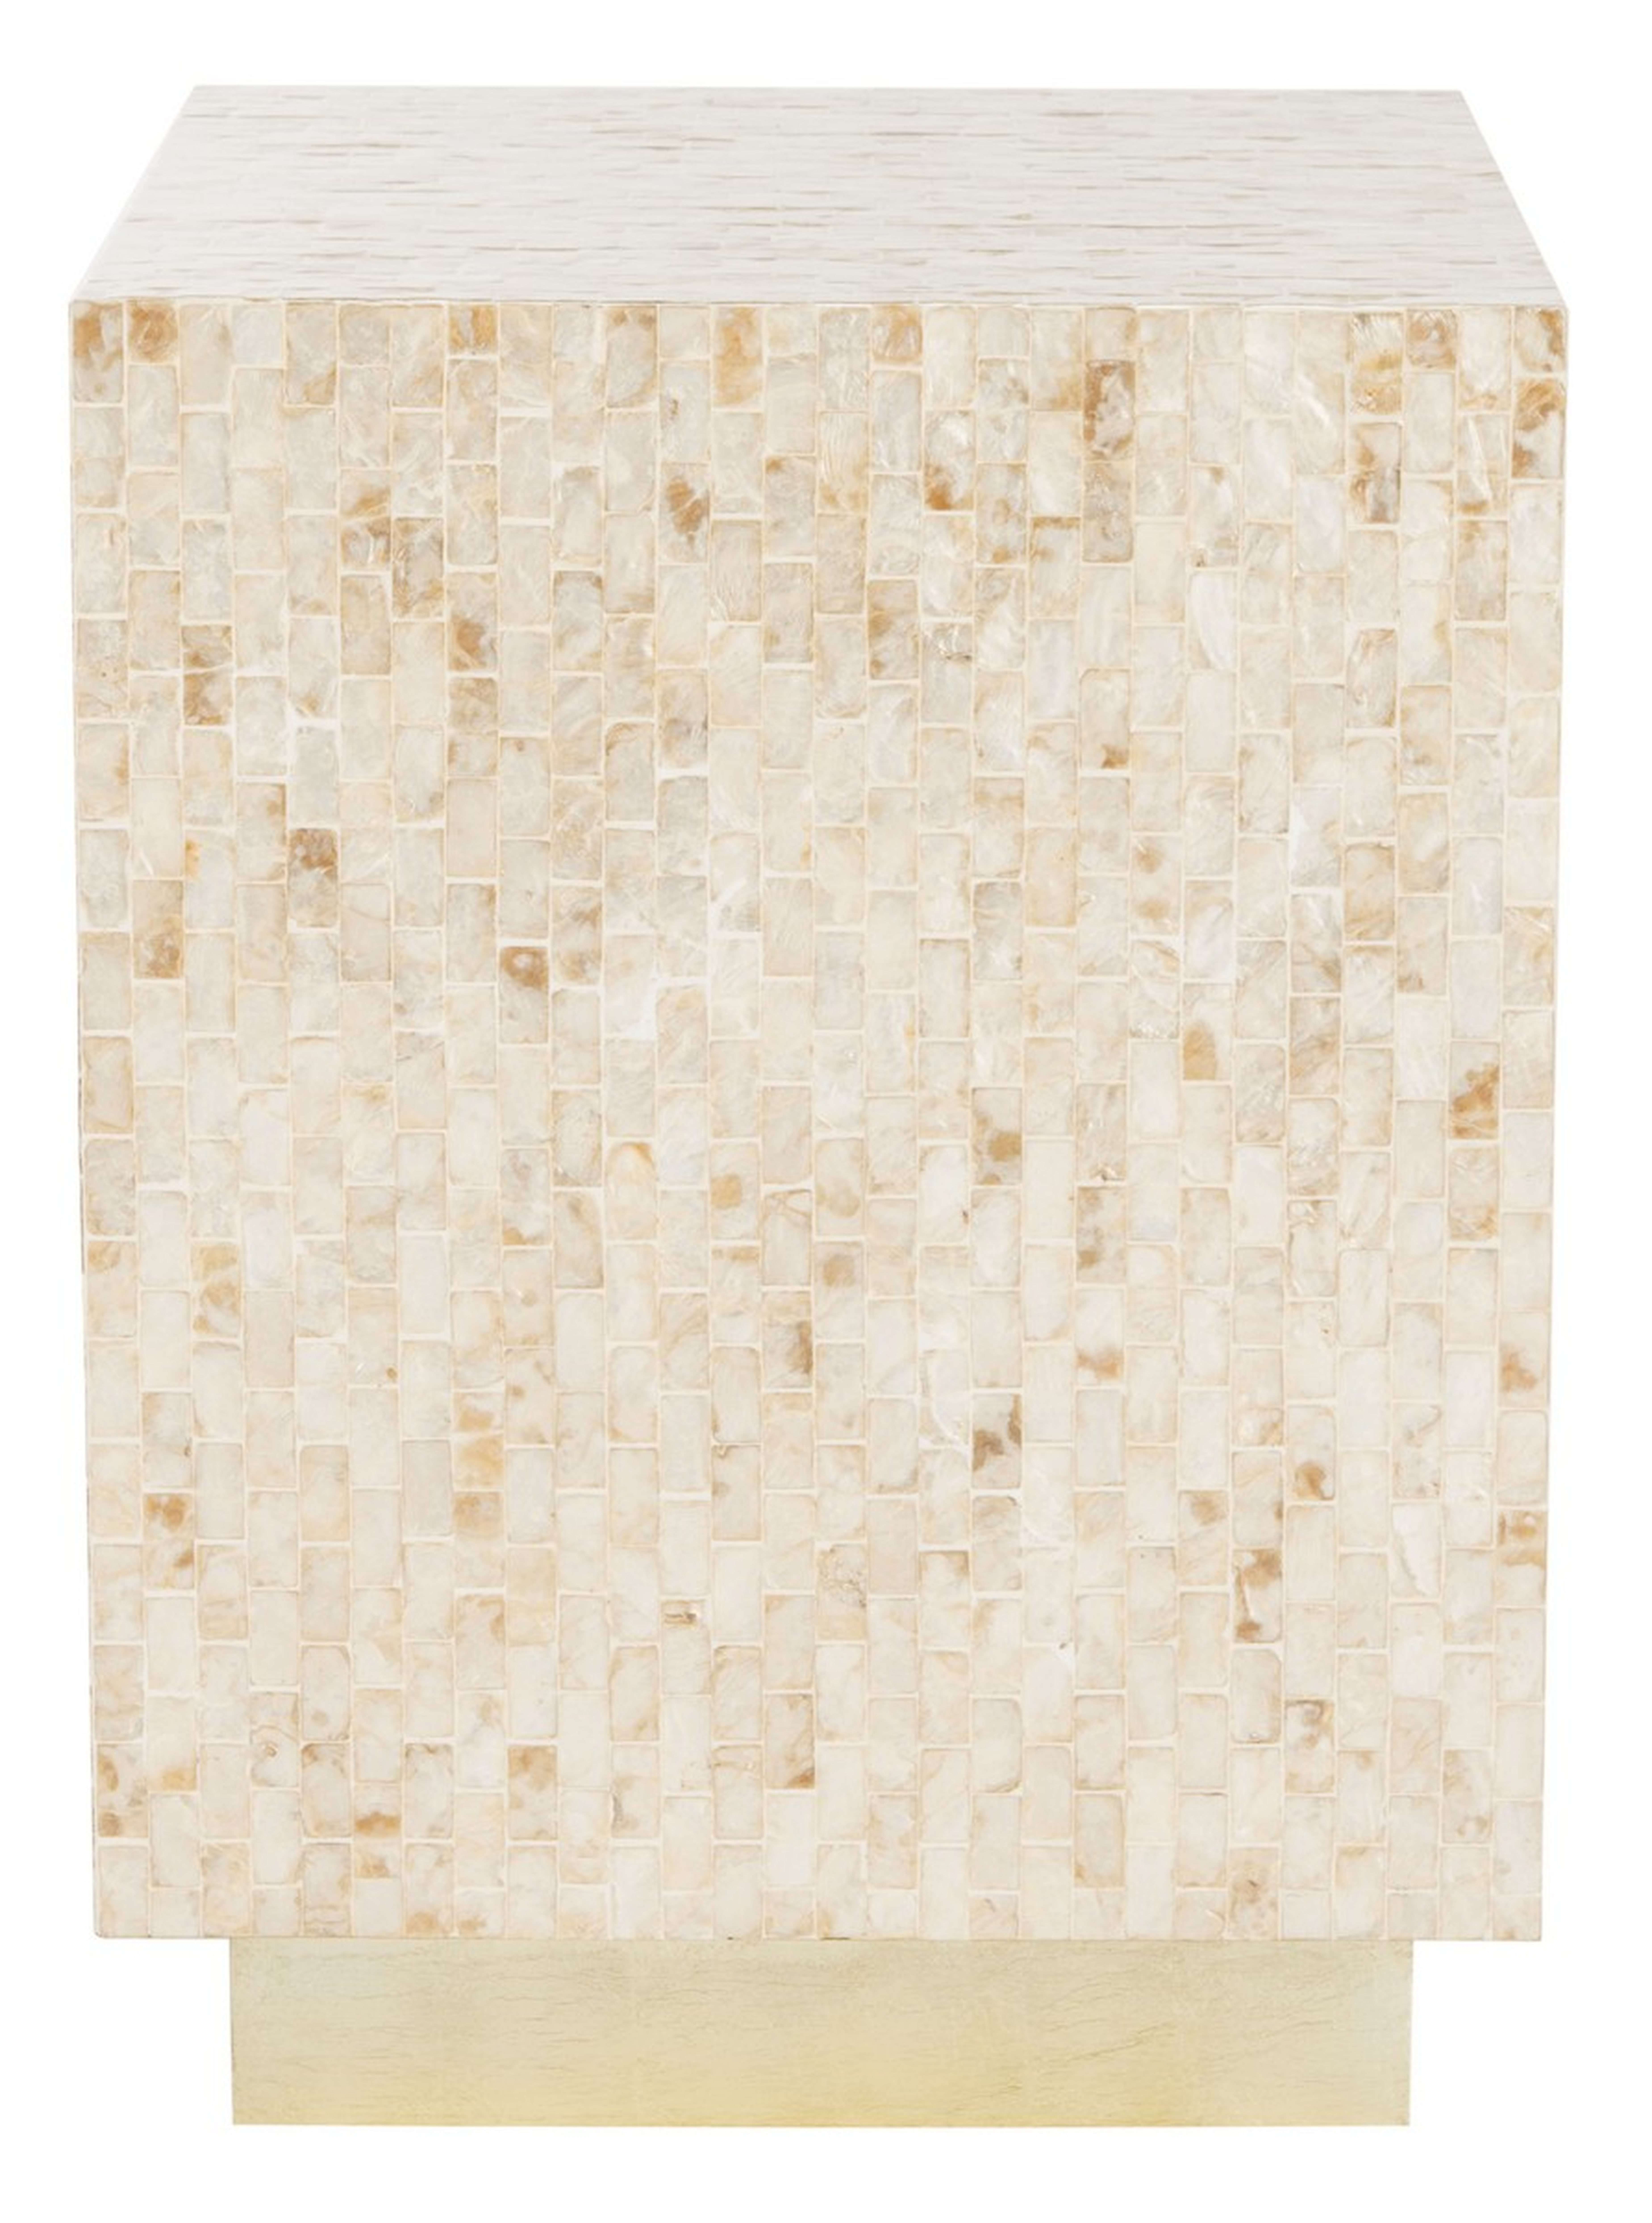 Juno Rectangle Mosaic Side Table - Multi Beige/Gold - Arlo Home - Arlo Home